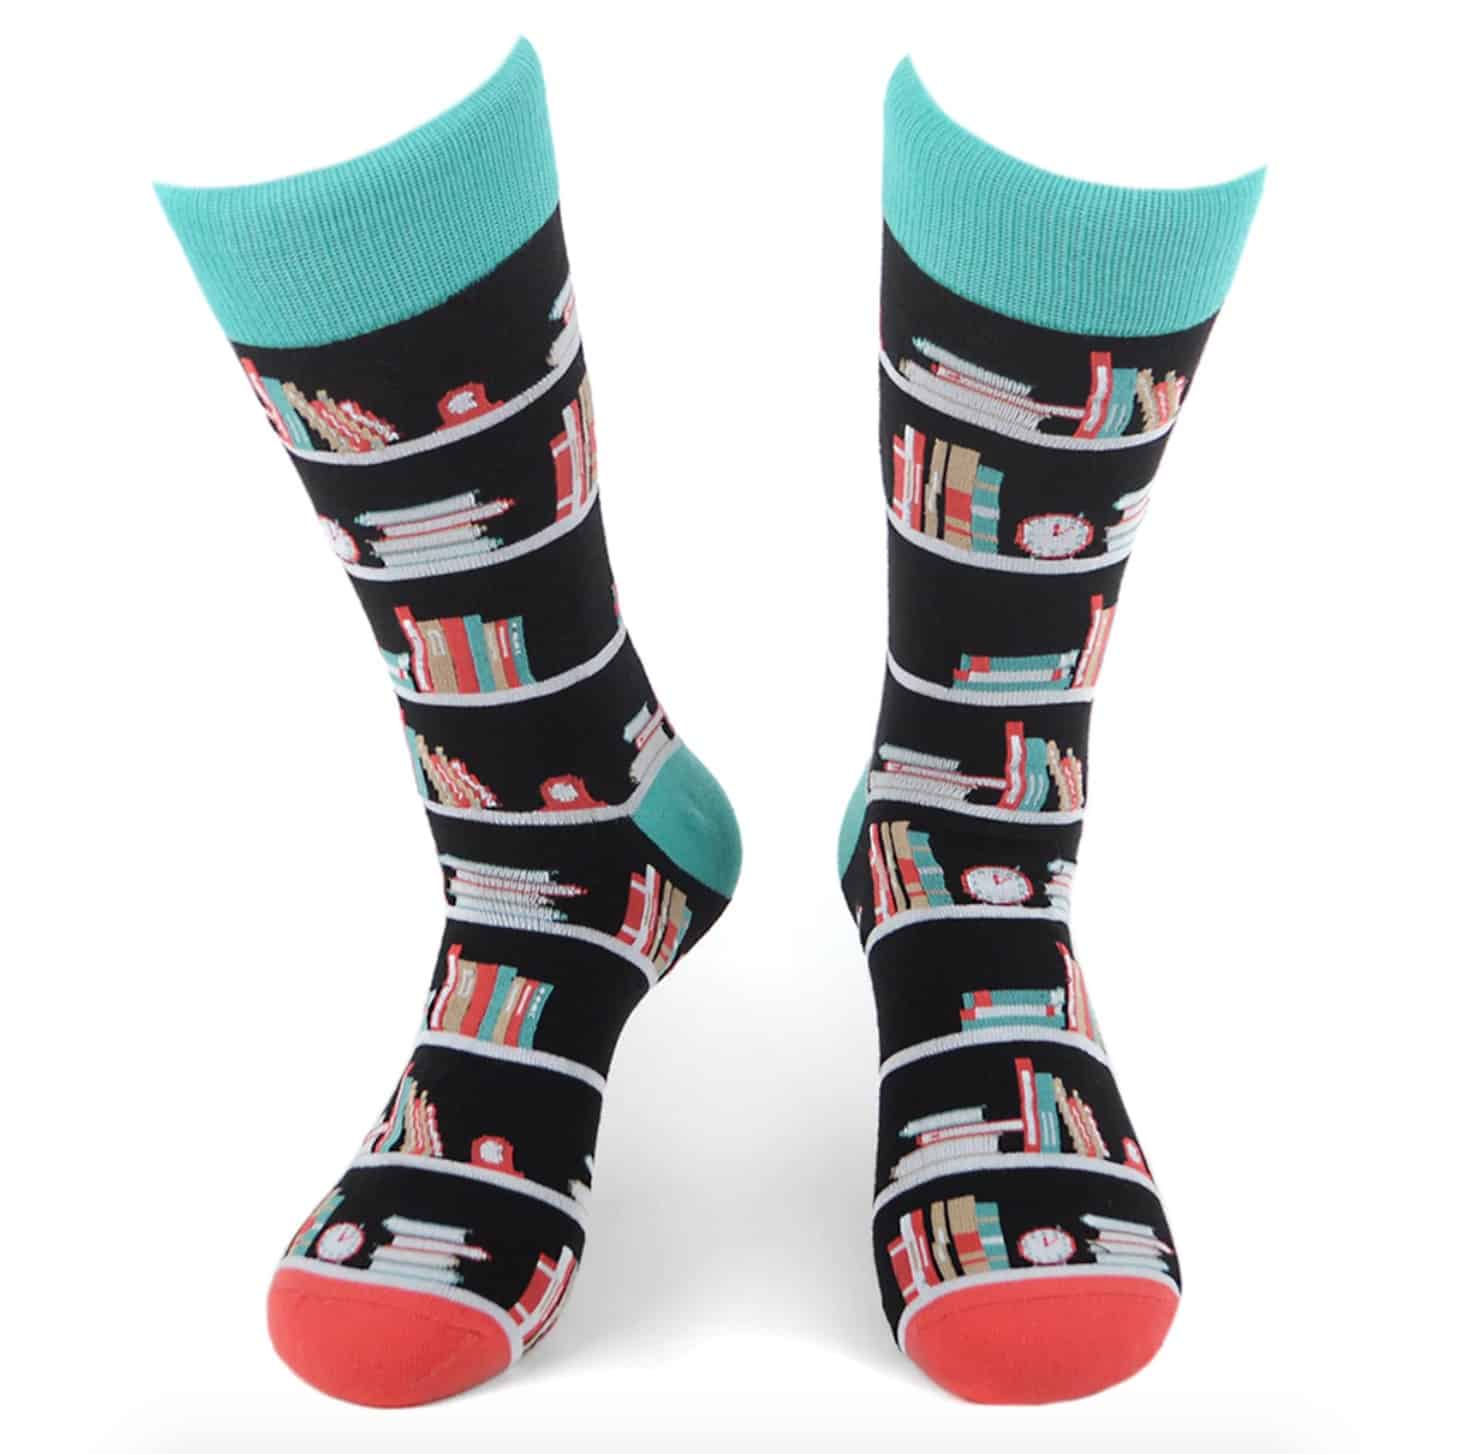 Bookshelf socks